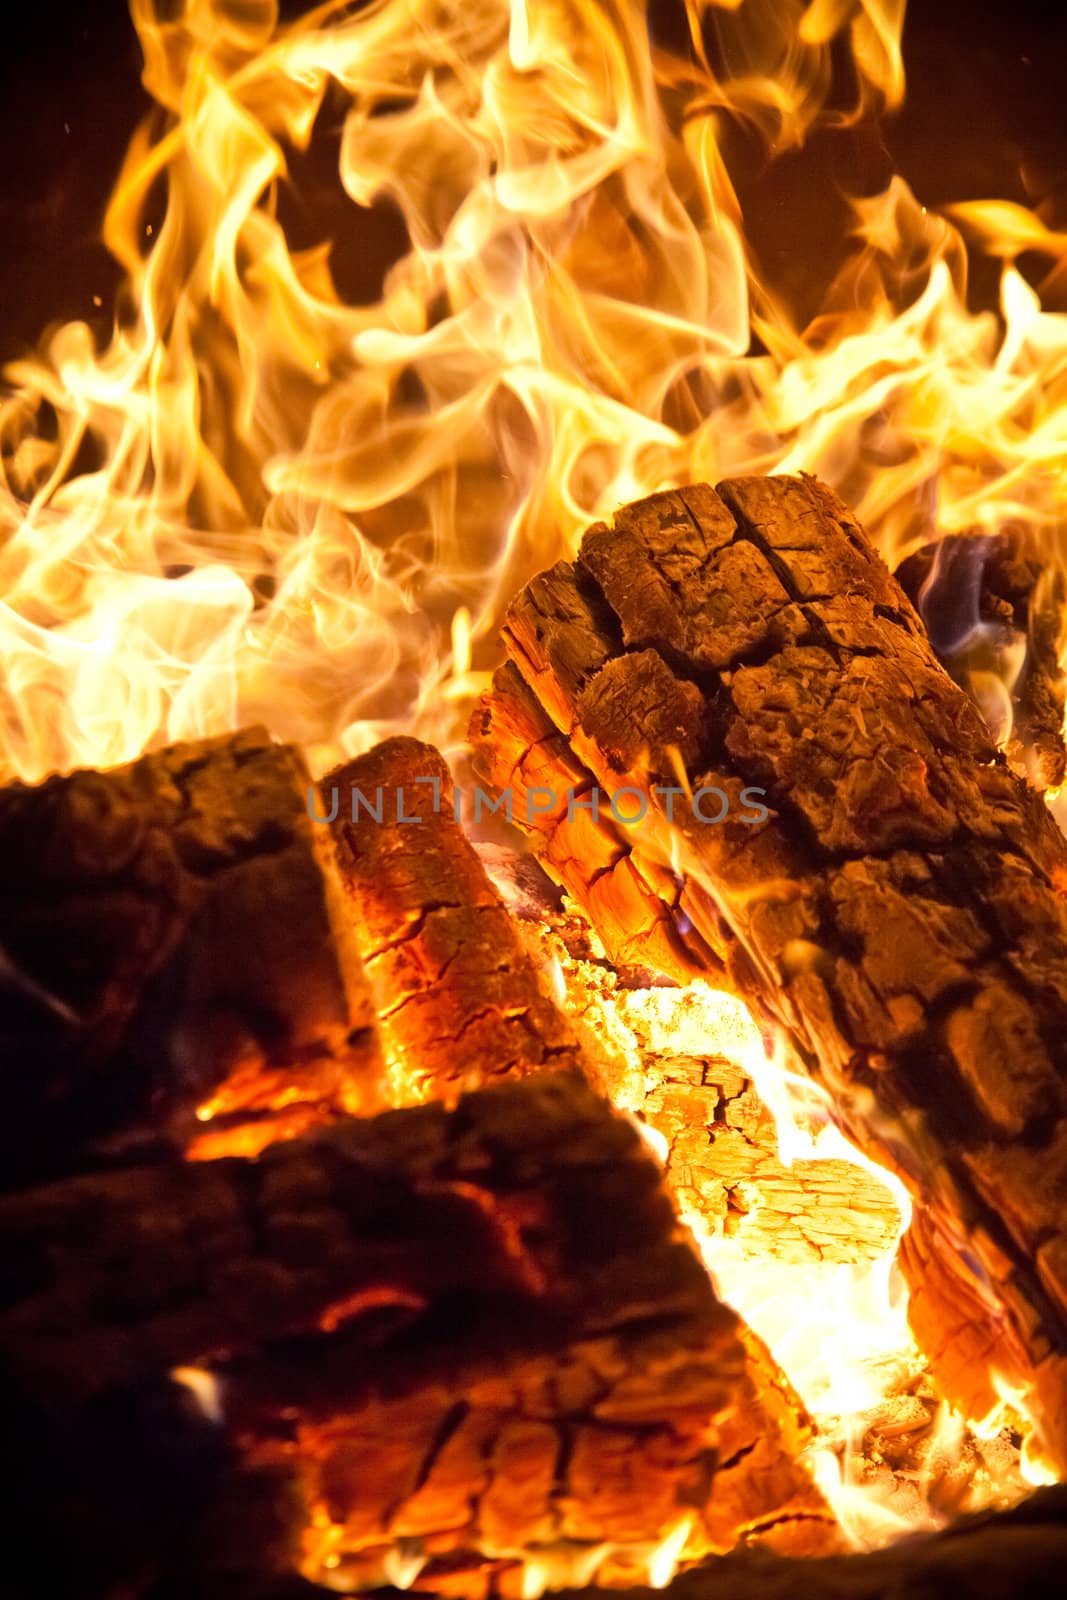 Close-up of flames and log wood burning